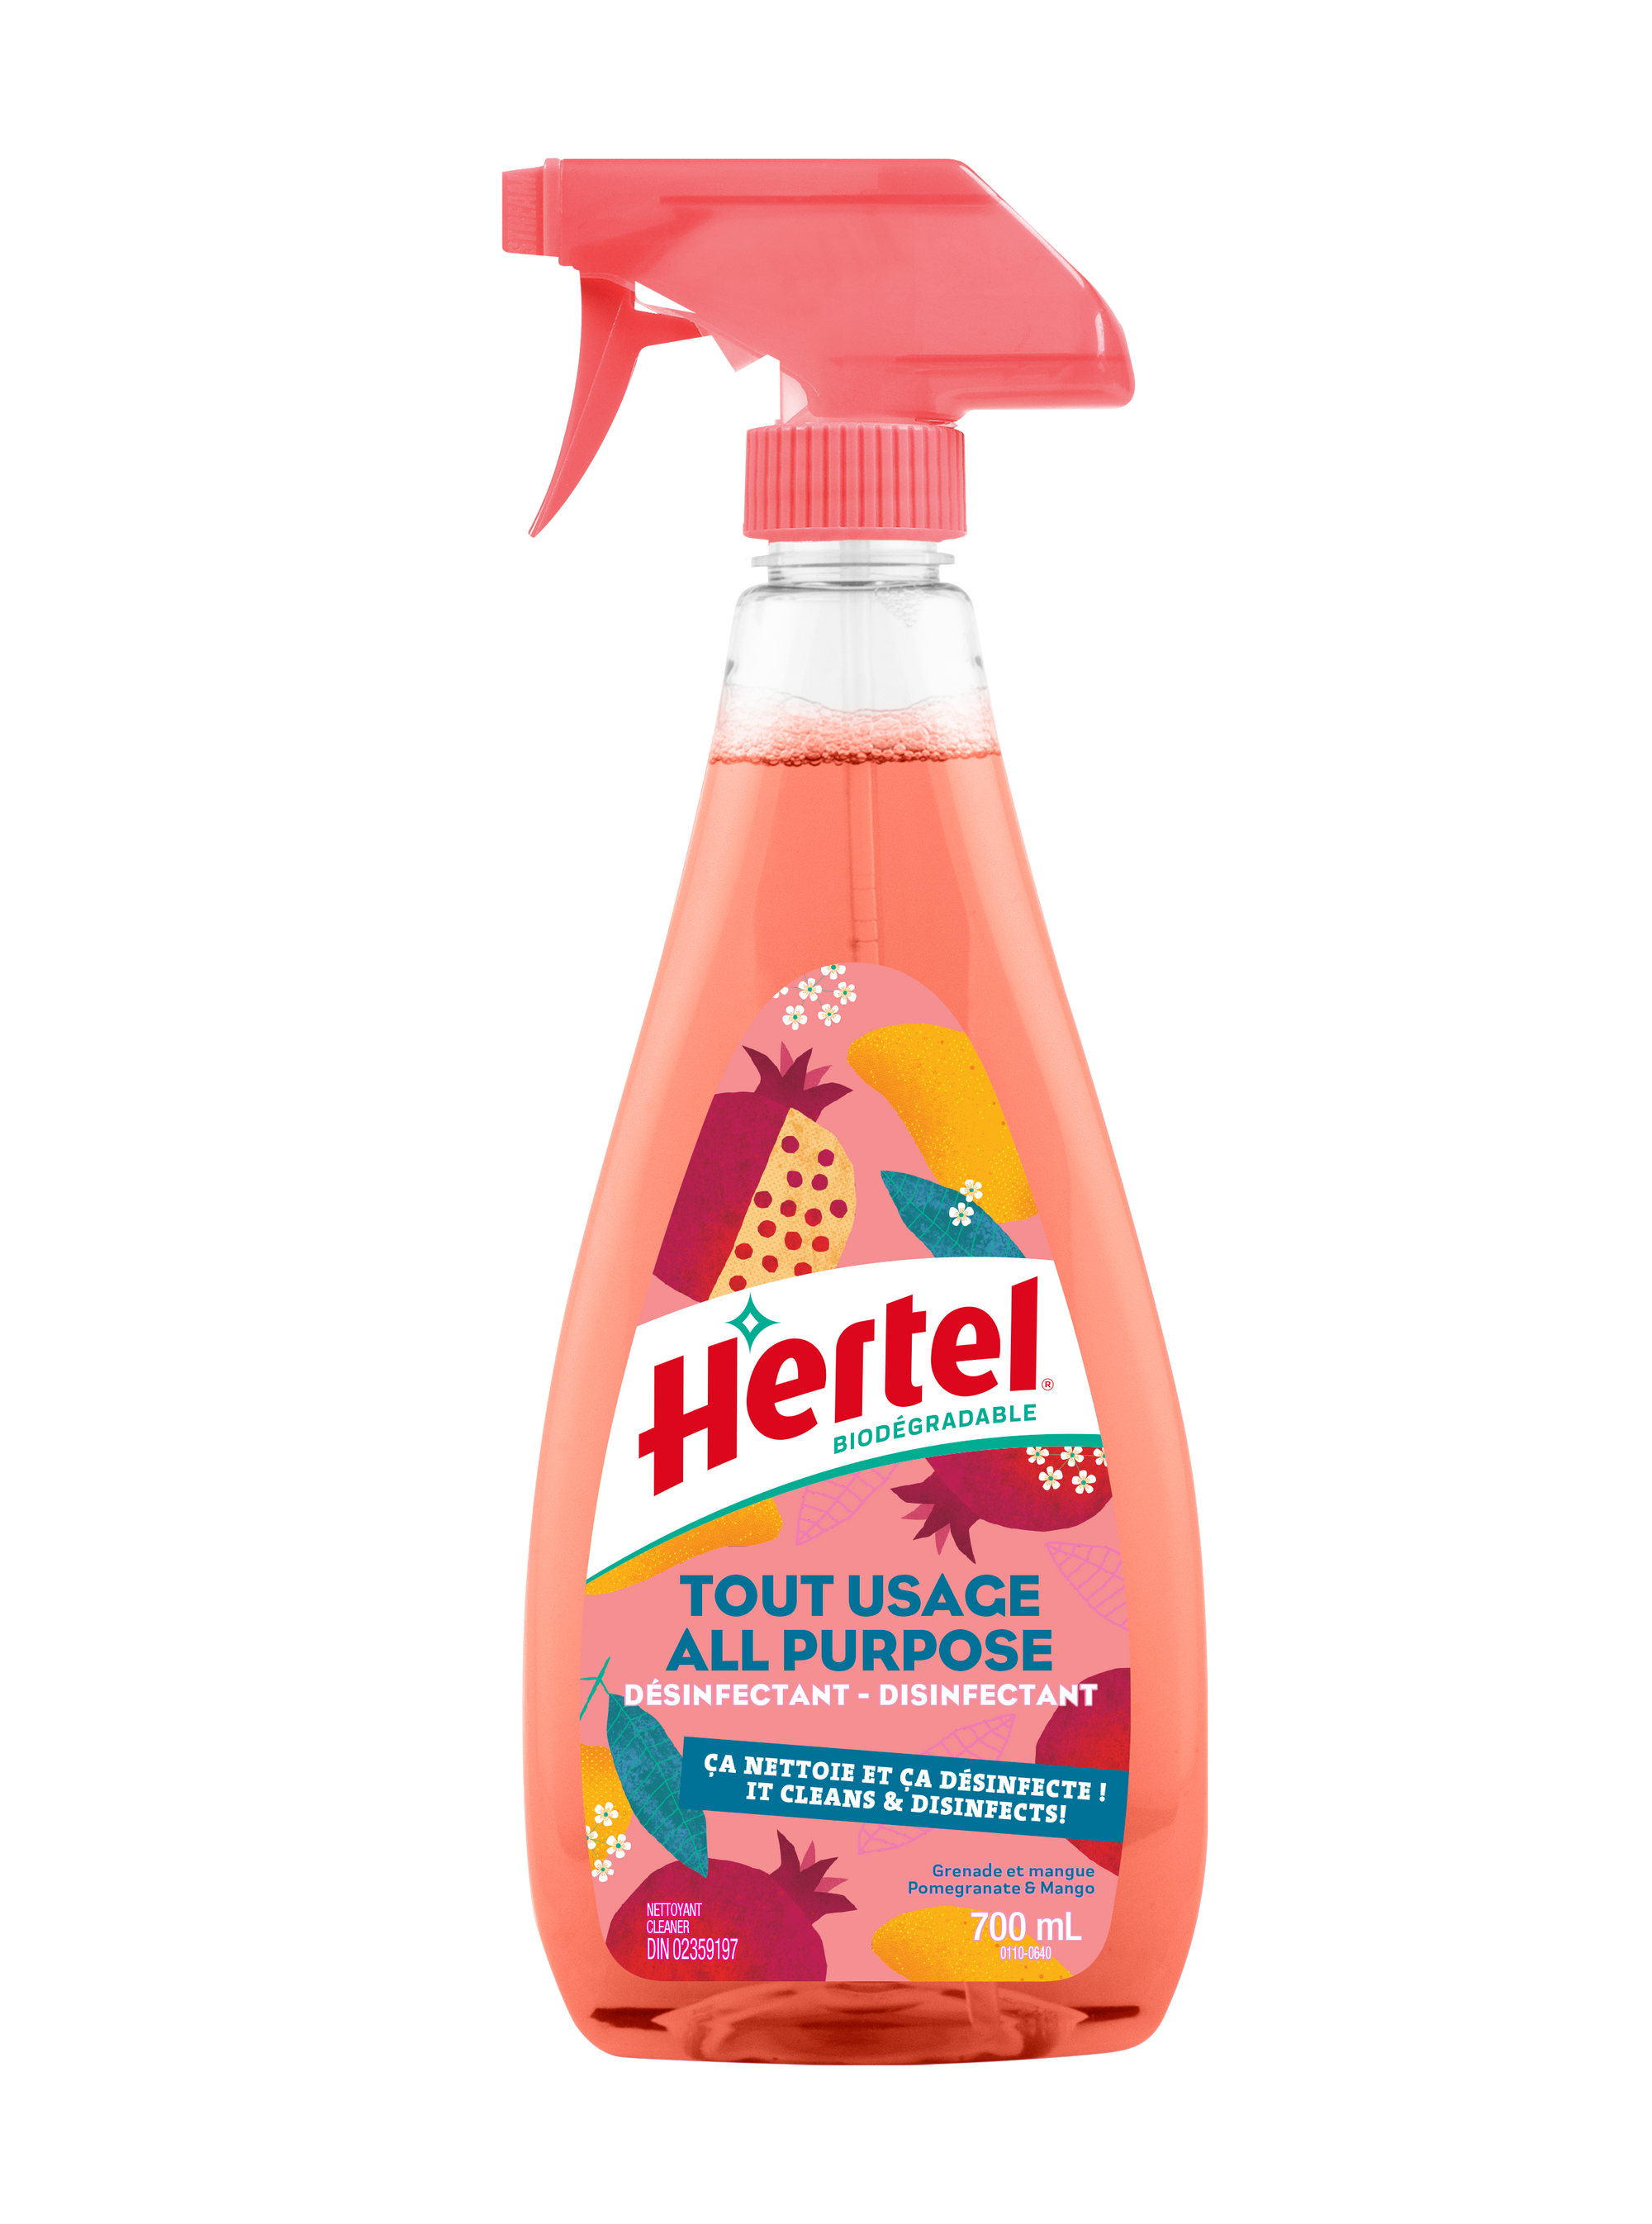 Hertel All Purpose Disinfectant Cleaner 700ml